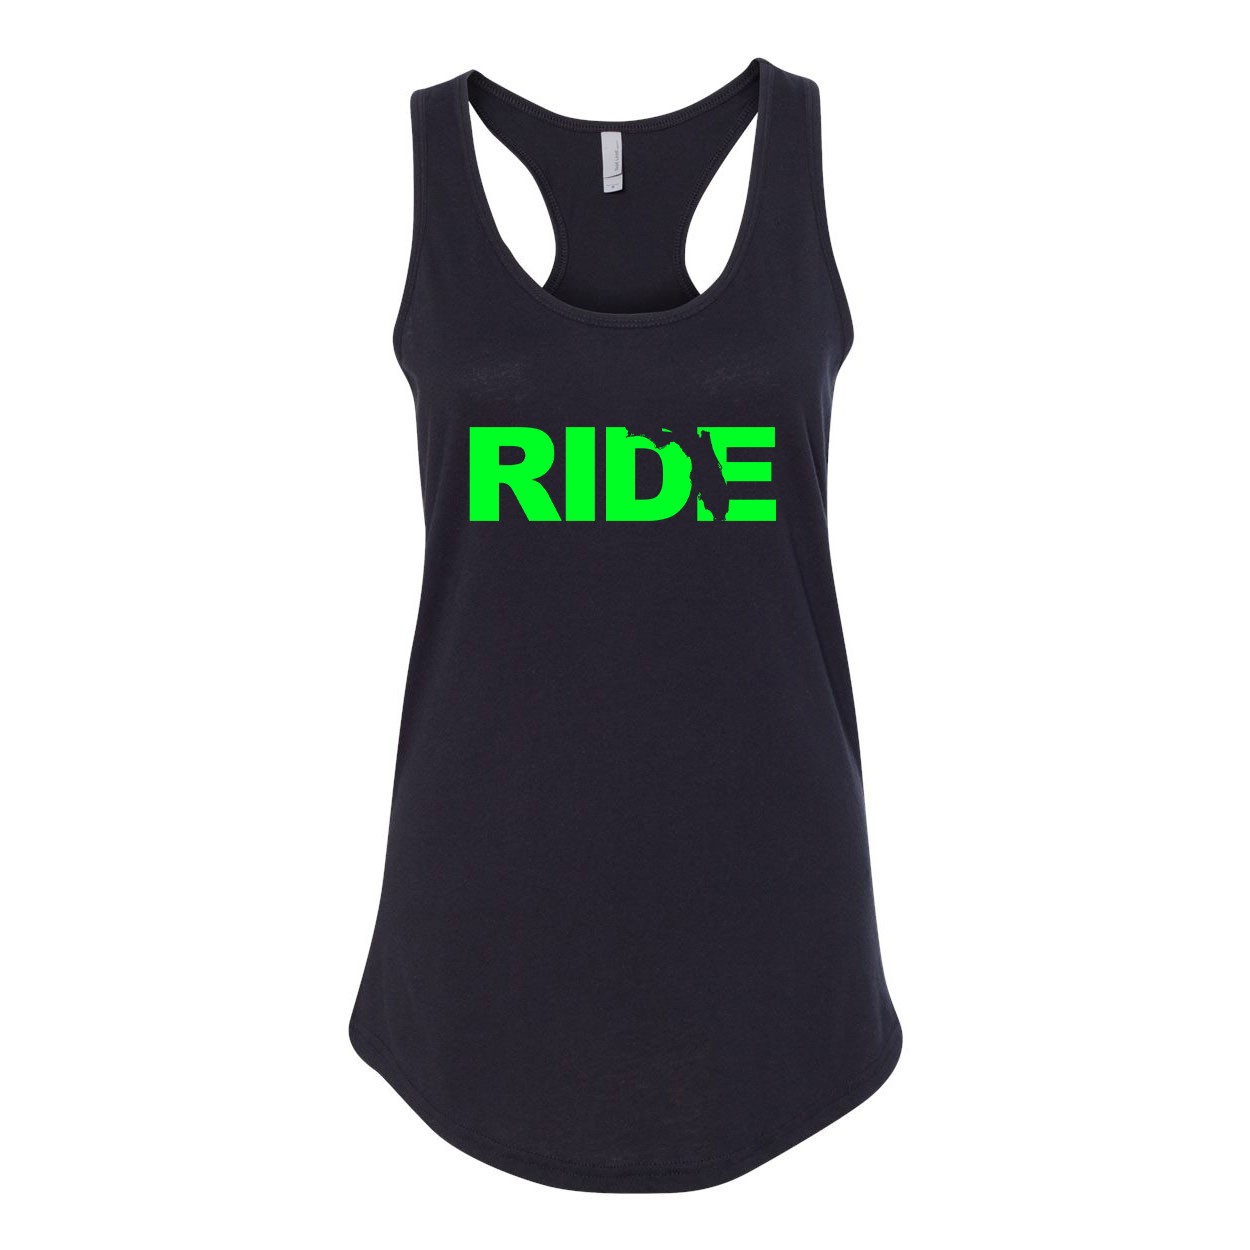 Ride Florida Classic Women's Racerback Tank Top Black (Green Logo)